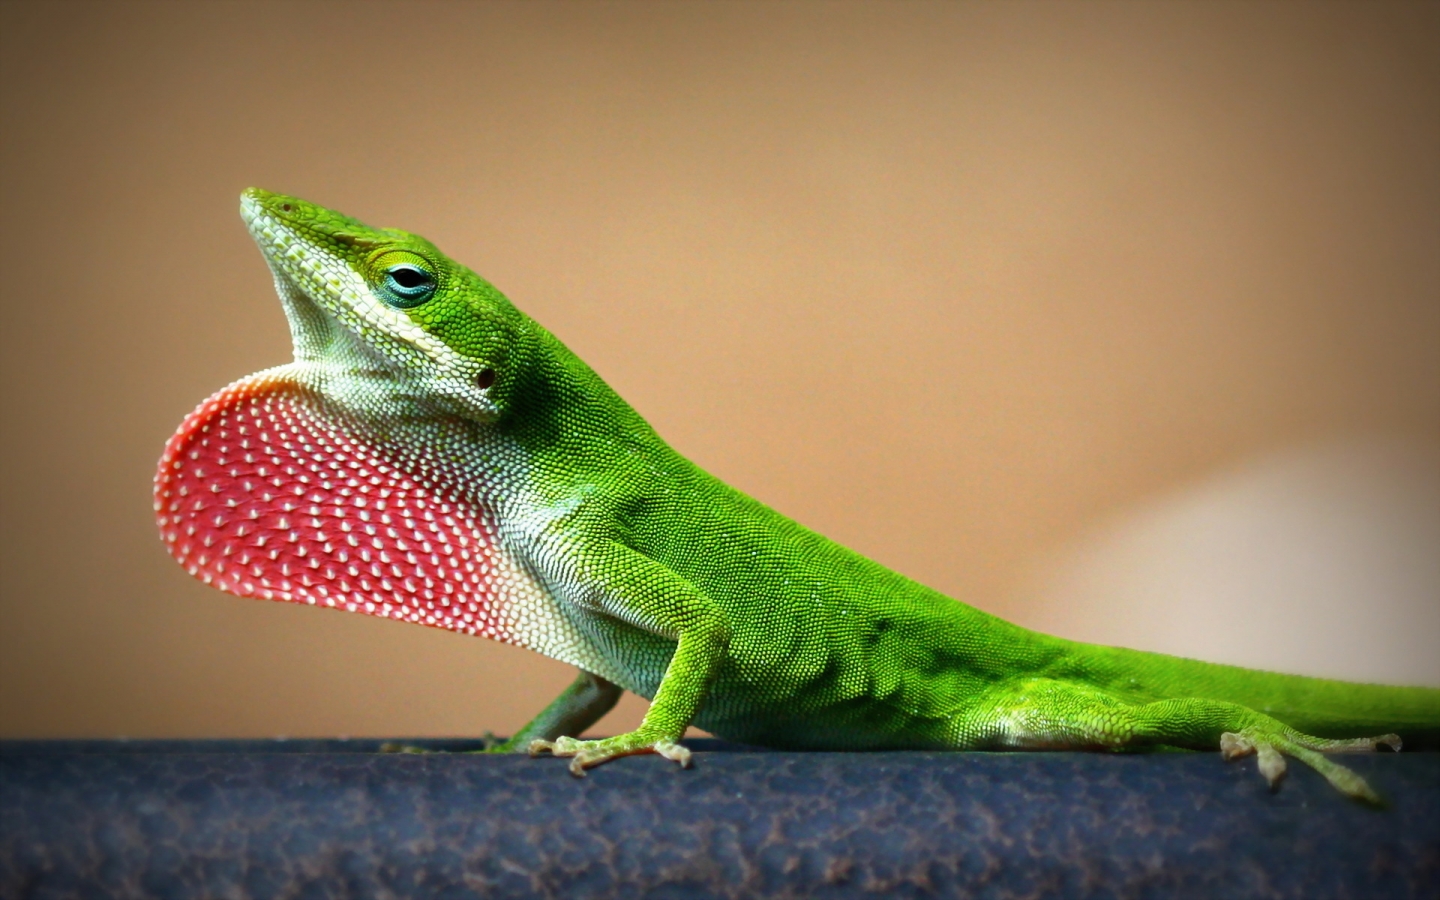 Young Lizard for 1440 x 900 widescreen resolution